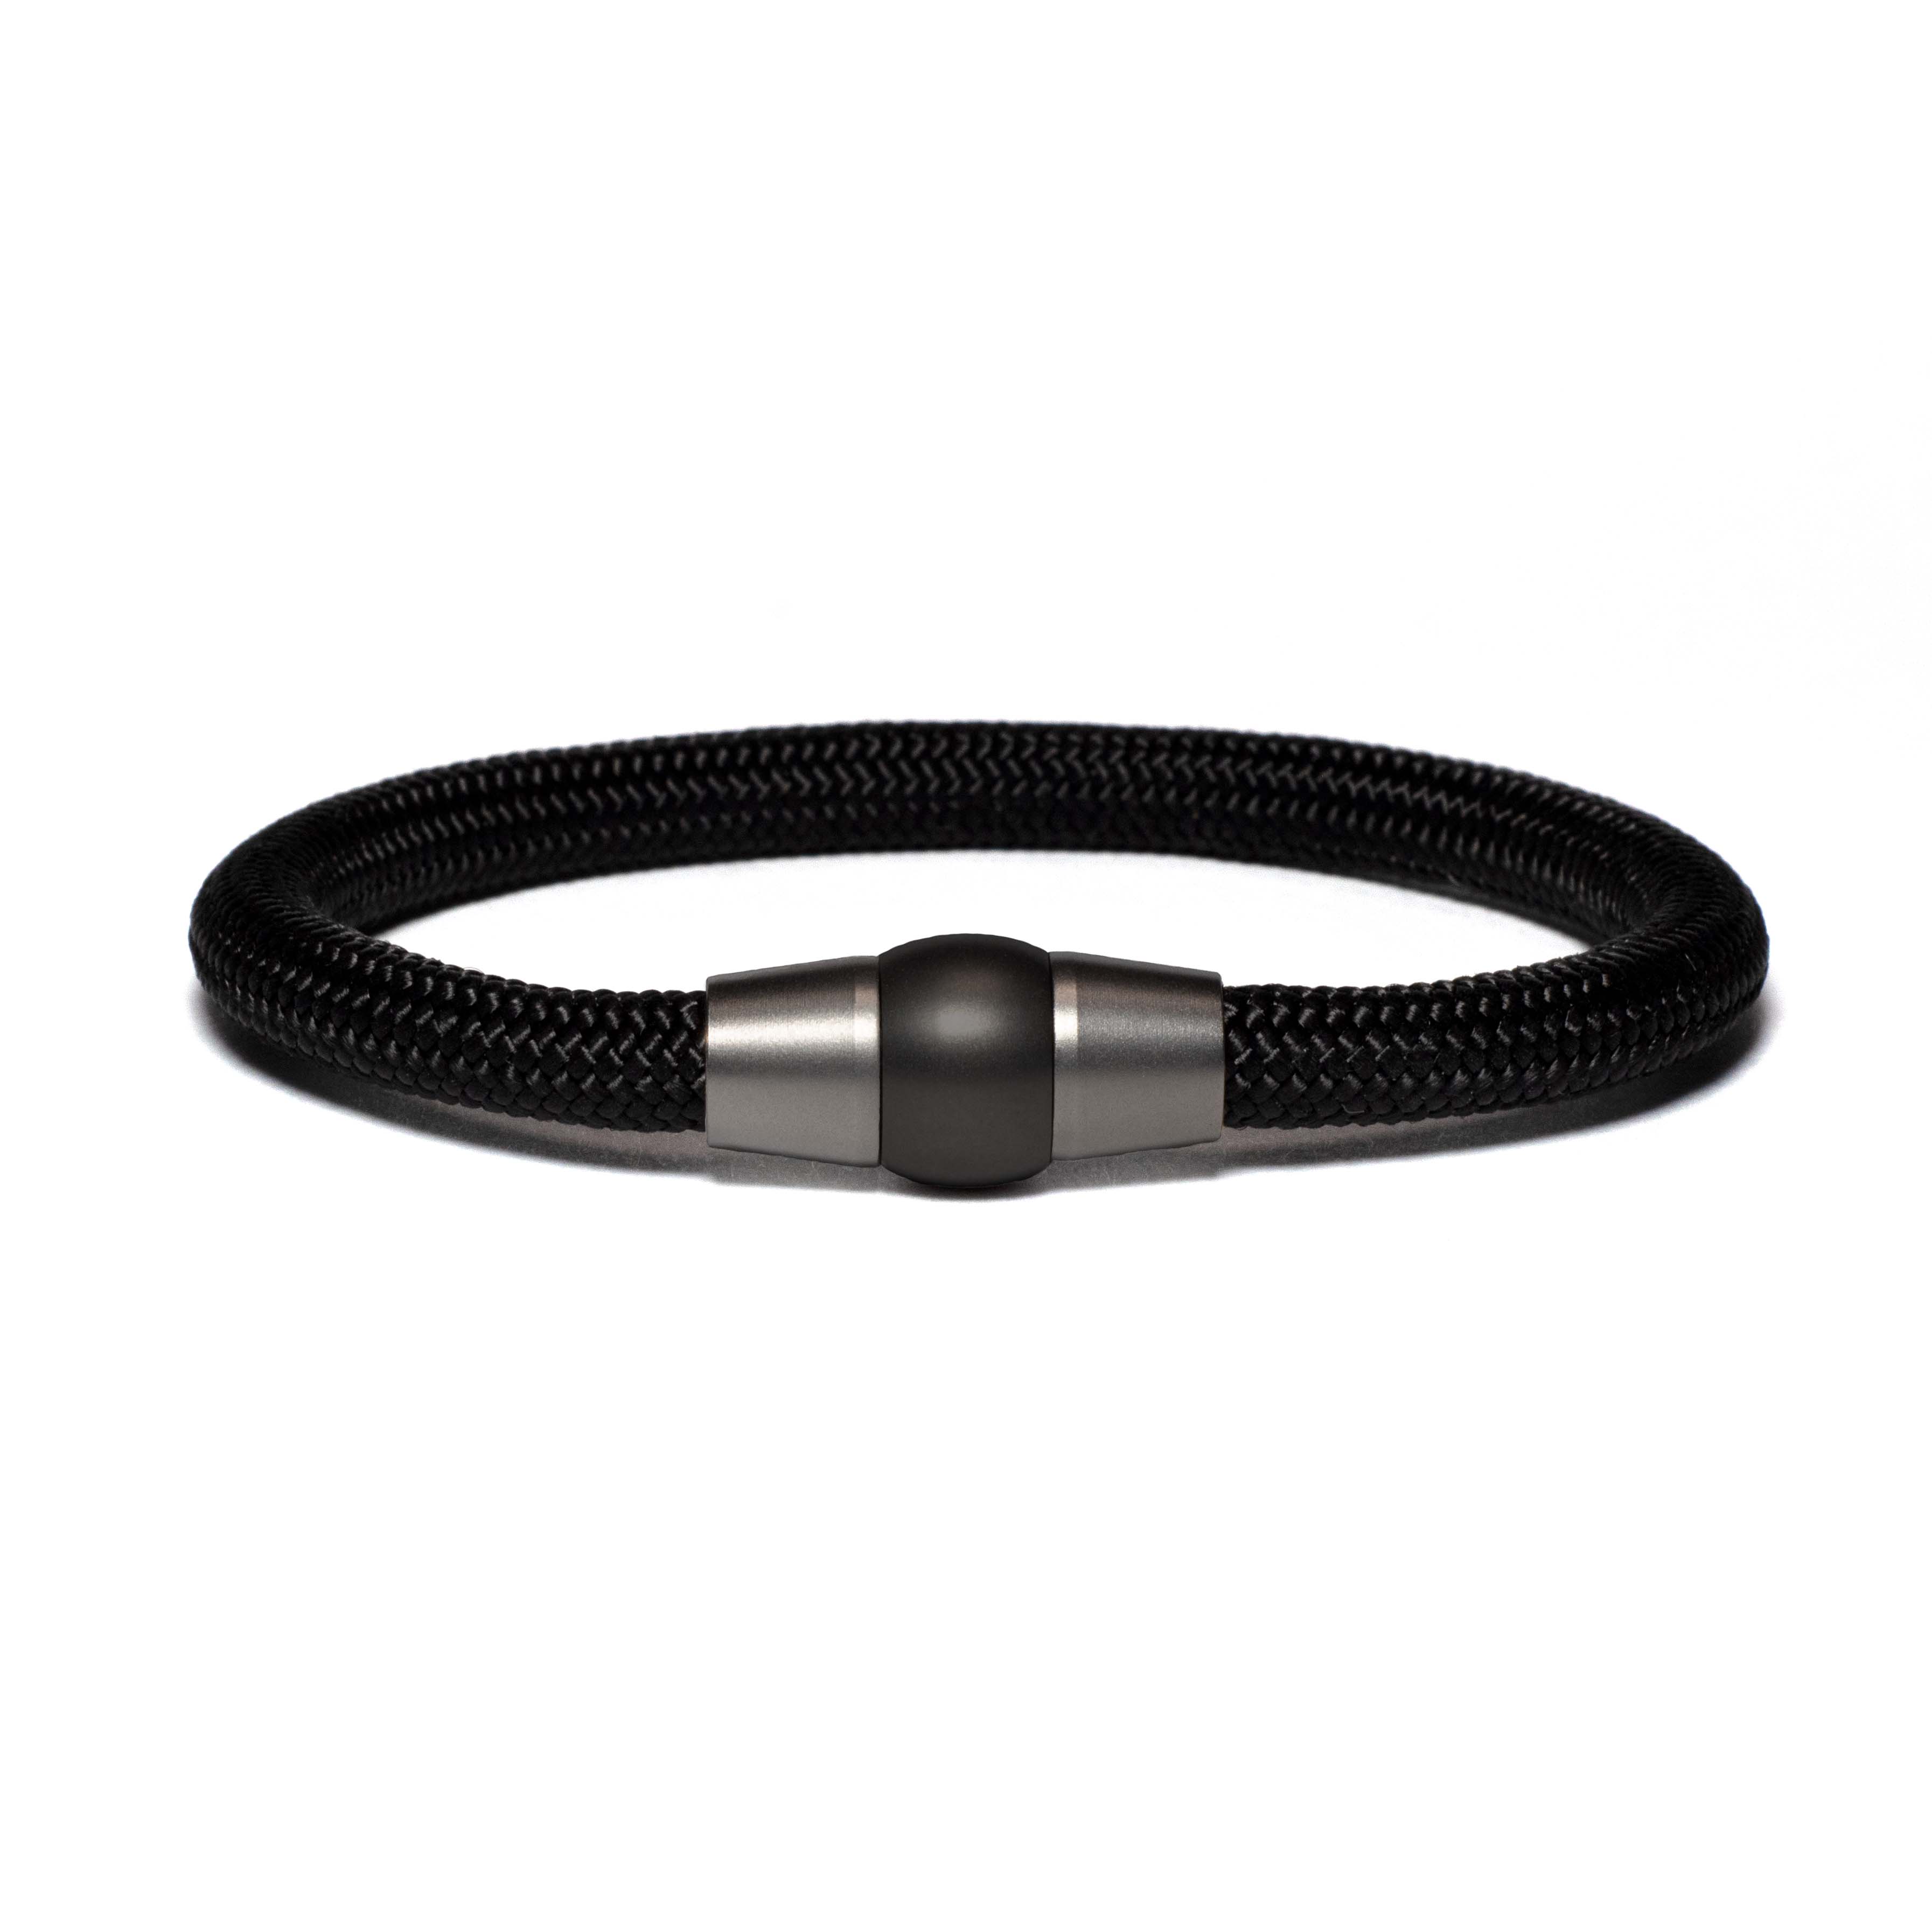 Bracelet bi-color black - Paracord black